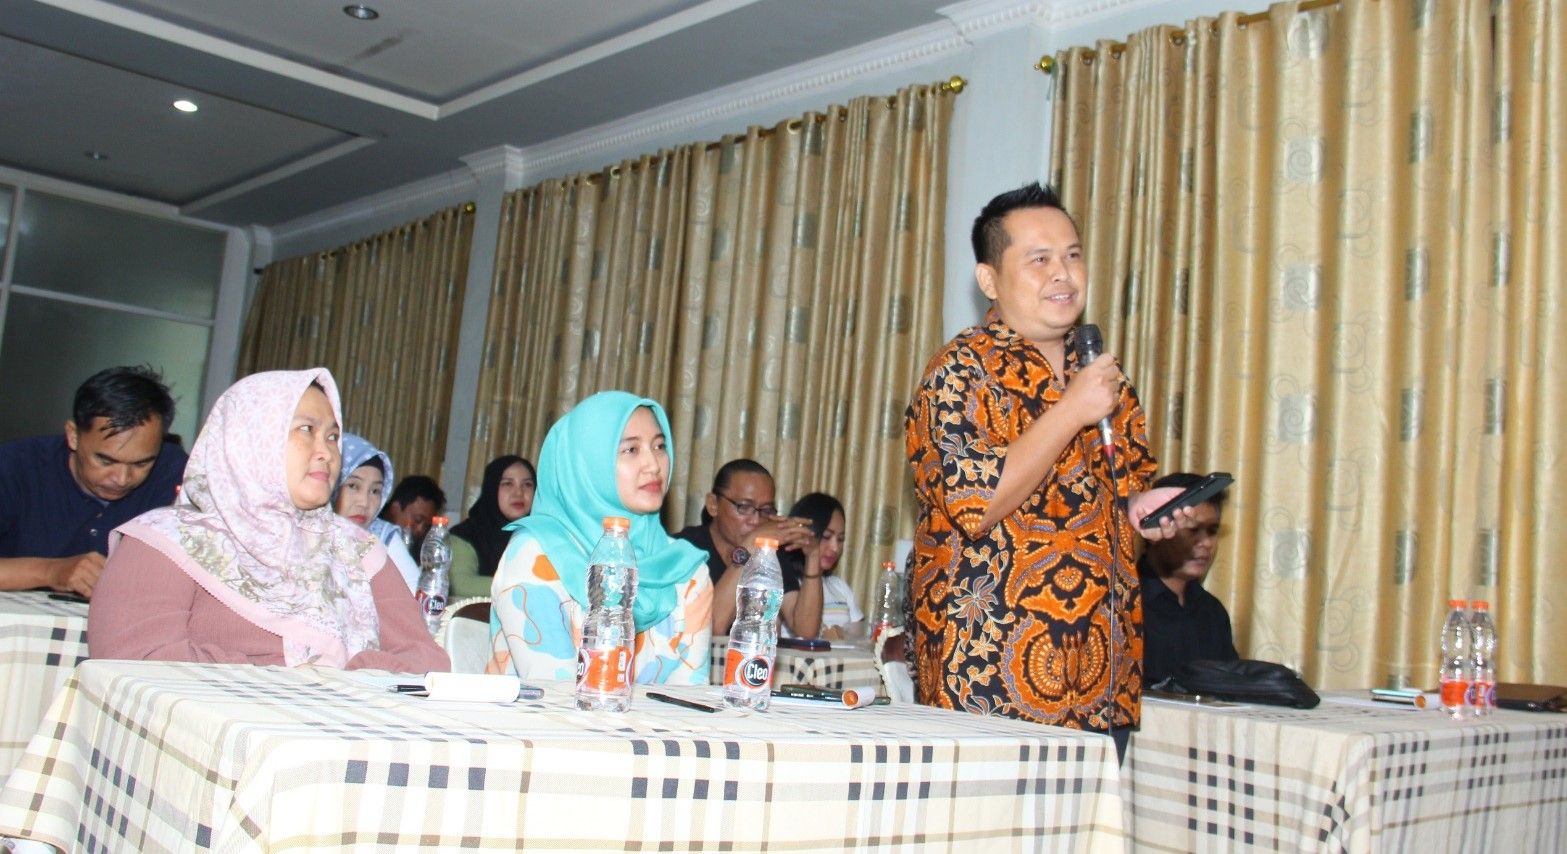 Seusai pemaparan materi workshop yang disampaikan Sekda Kuningan dilanjut dengan sesi diskusi yang cukup dinamis di Hotel Mountana Desa Sangkanurip Kecamatan Cigandamekar.